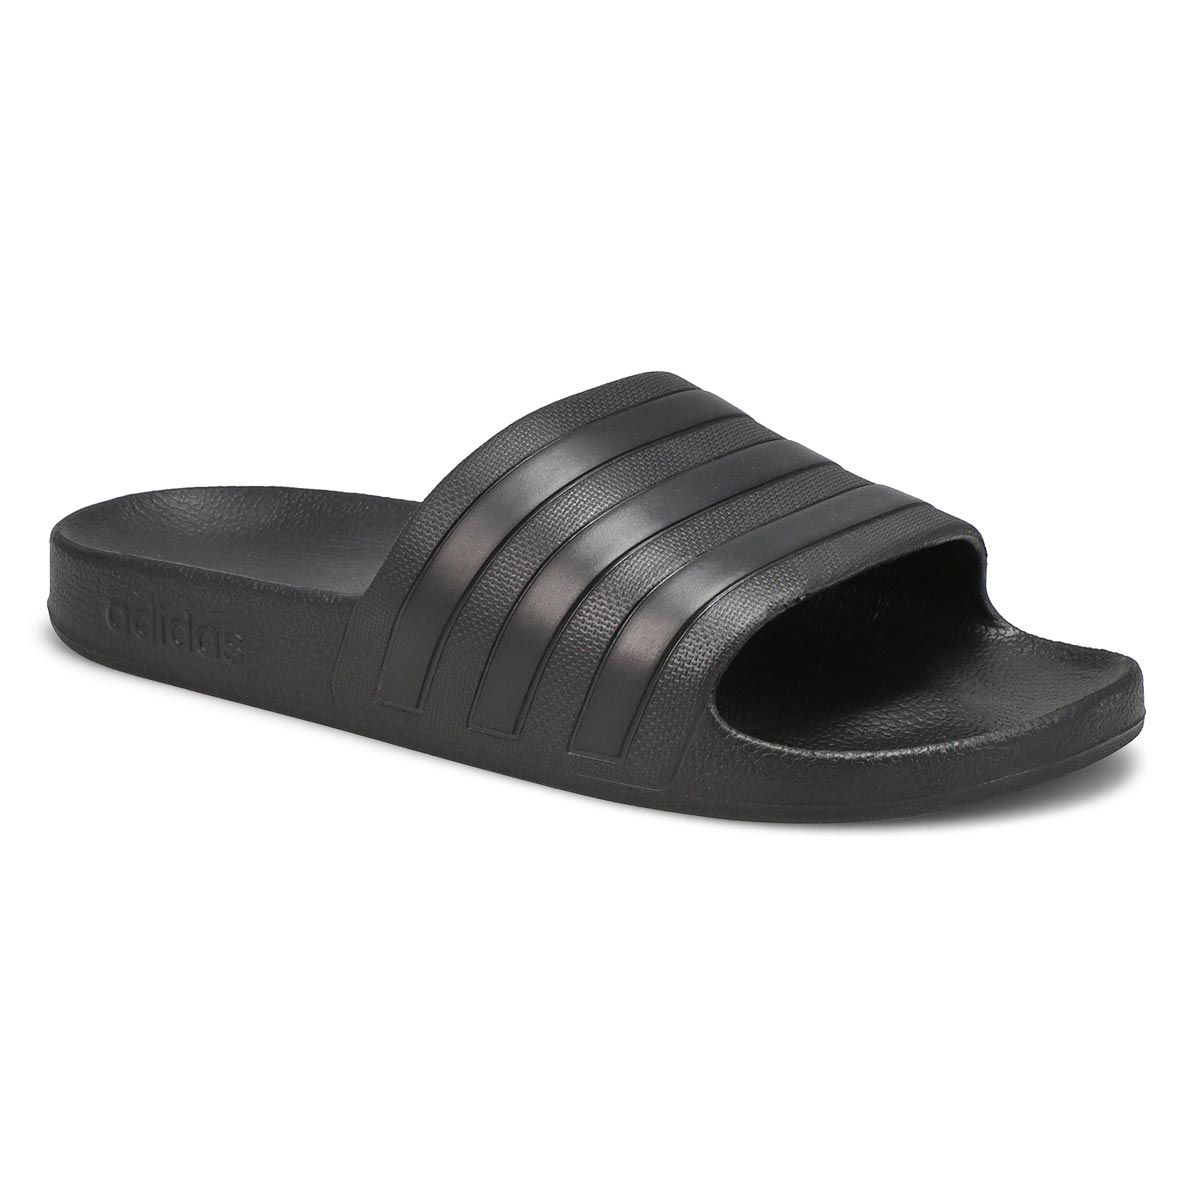 adidas Women's Adilette Aqua Slide Sandal - B